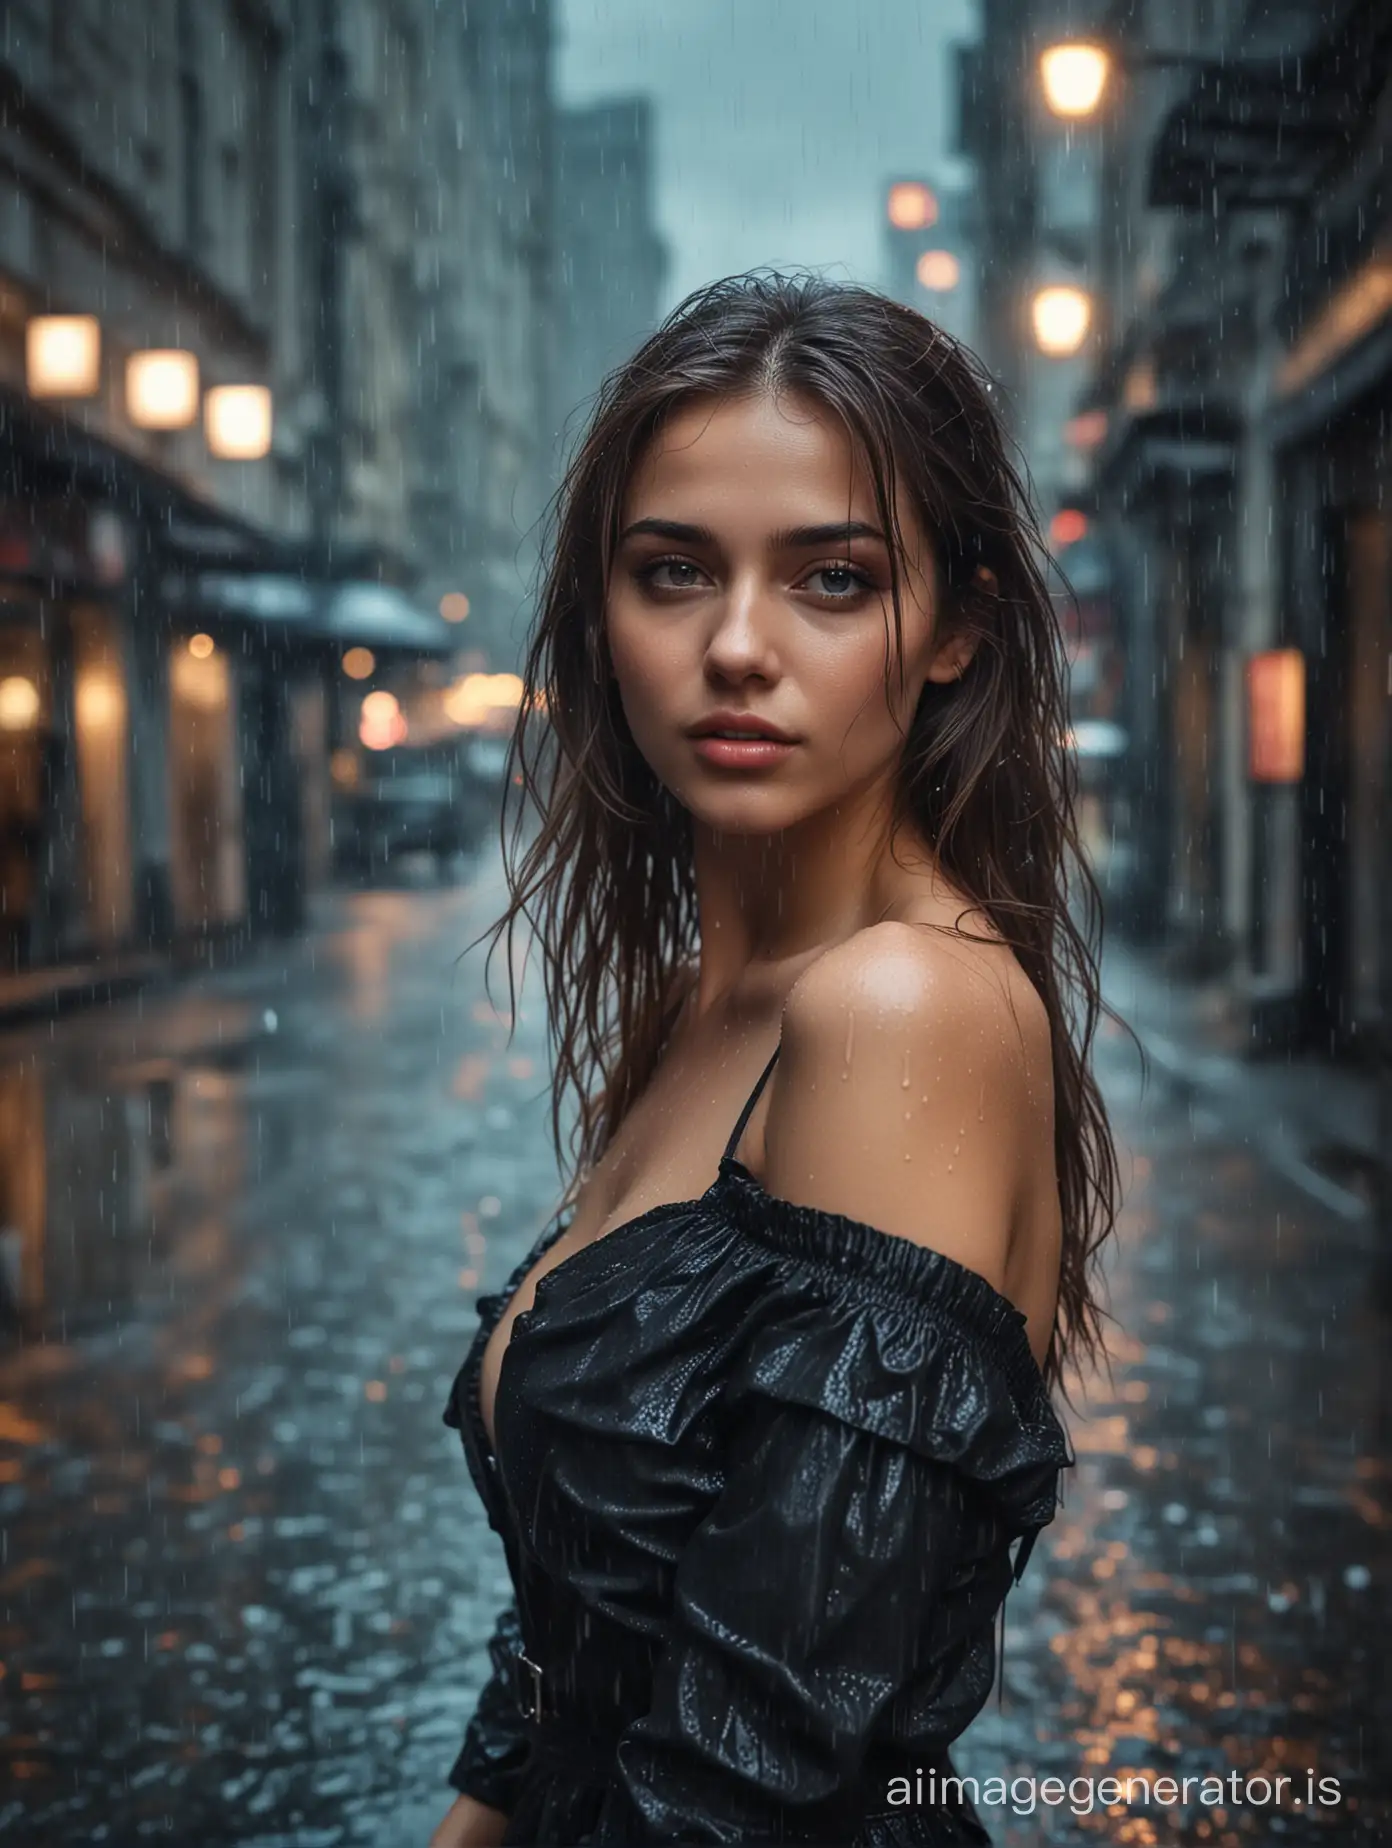 young beautiful girl in a big city, rain, dark, scantily dressed, beautiful face, dreamy